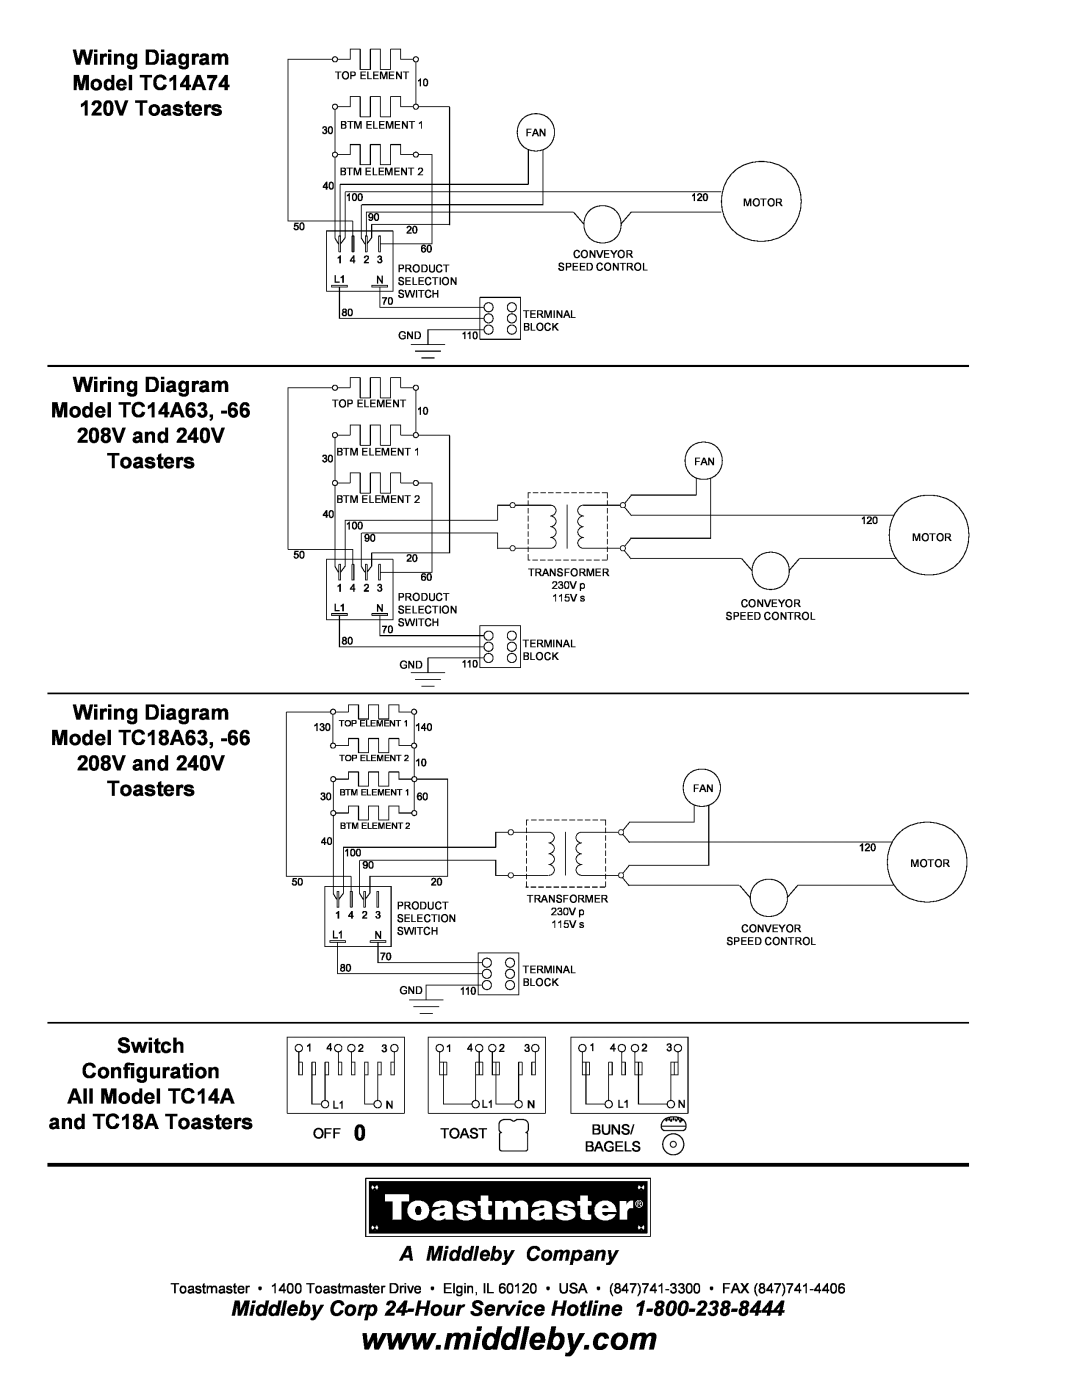 Toastmaster TC18A Wiring Diagram Model TC14A74 120V Toasters, Wiring Diagram Model TC14A63 208V and Toasters 